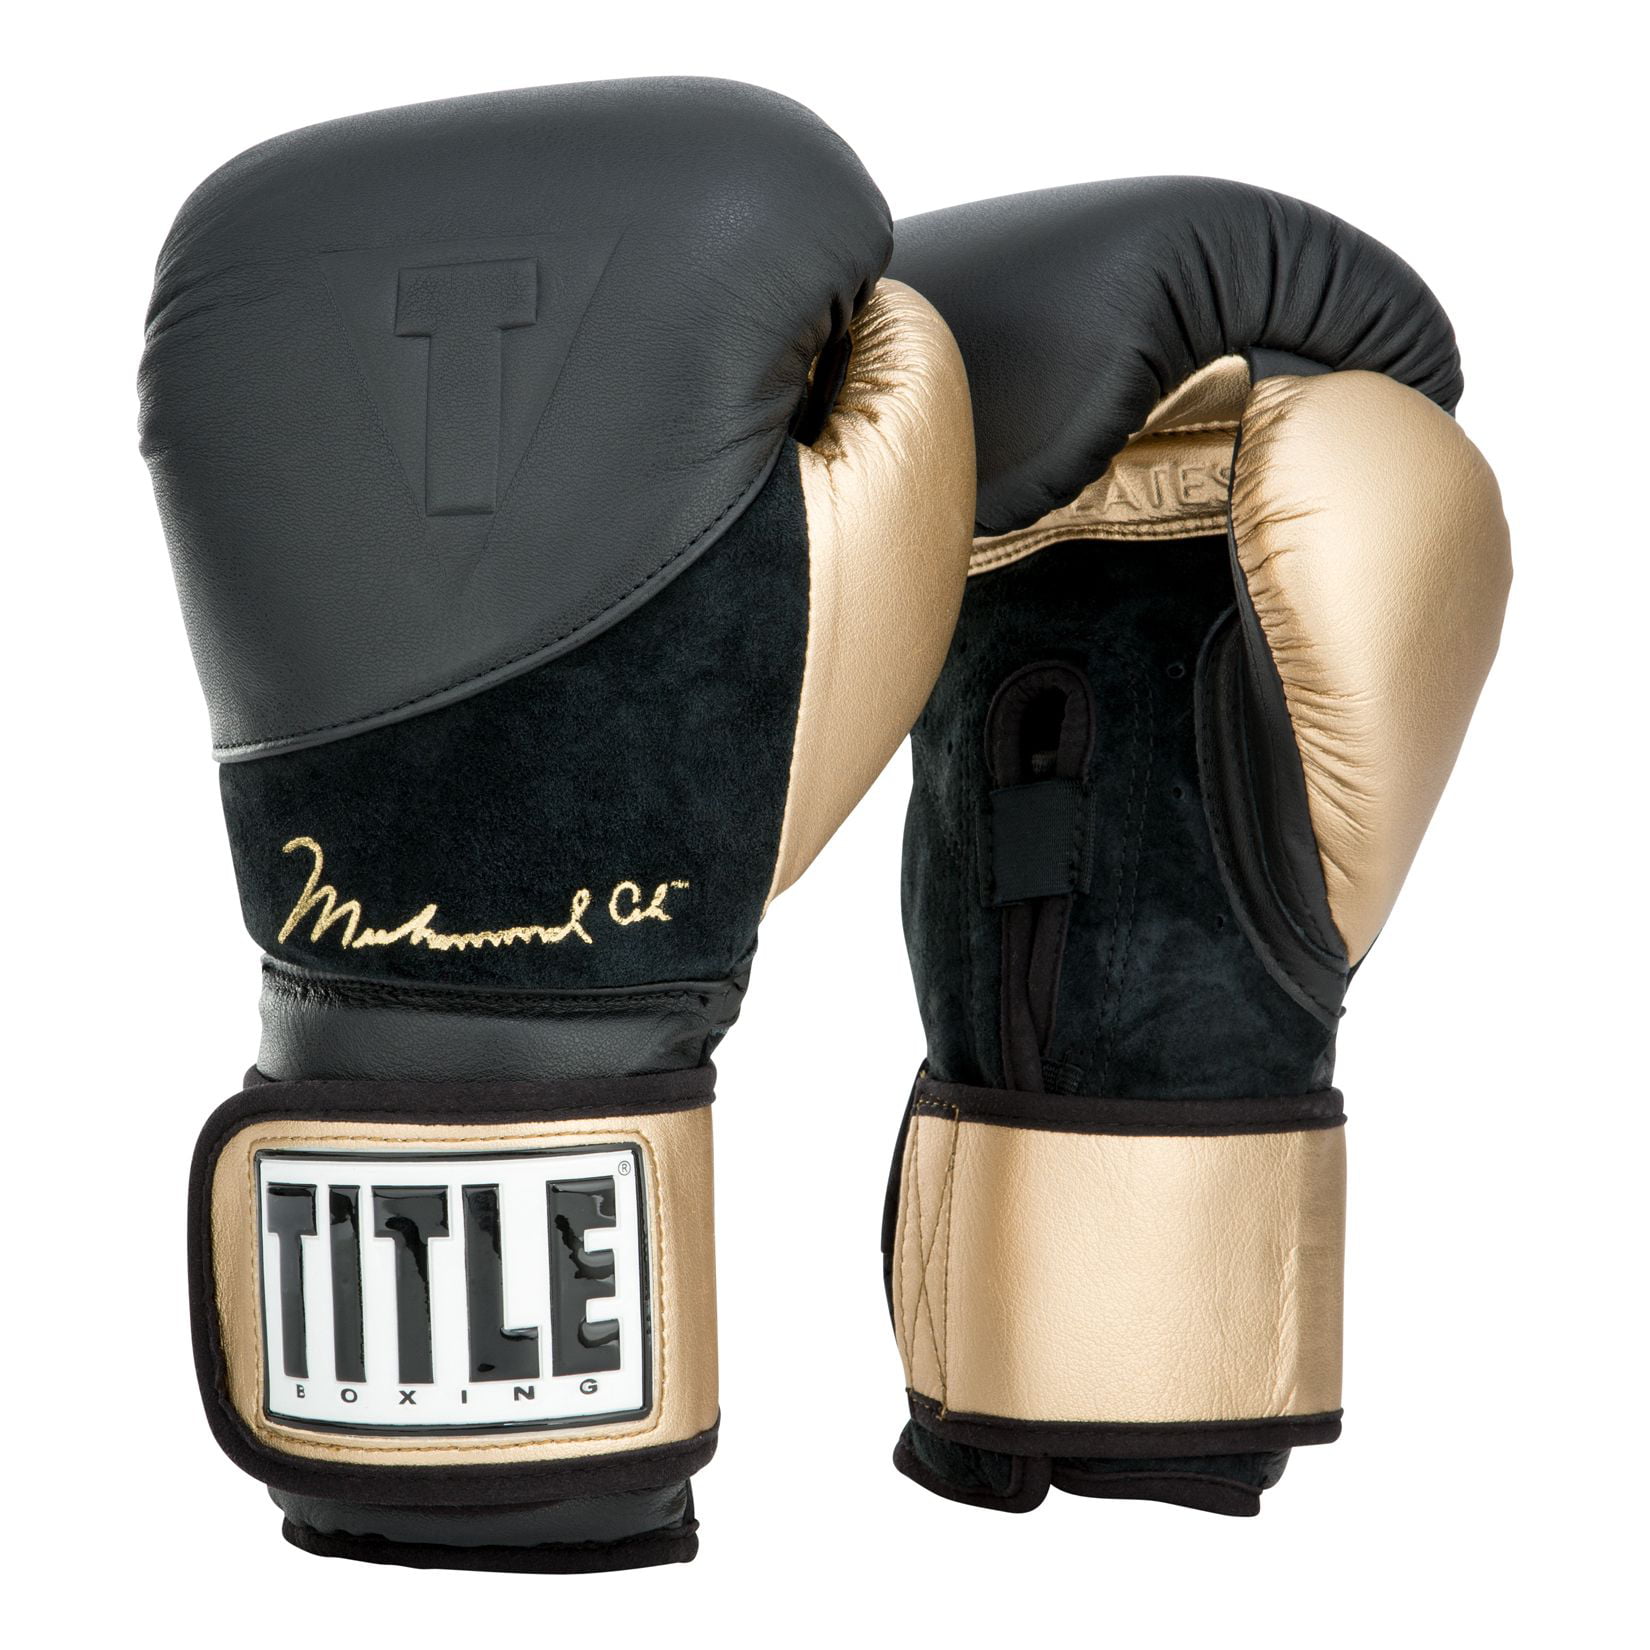 Title Boxing Affluent Leather Bag Gloves